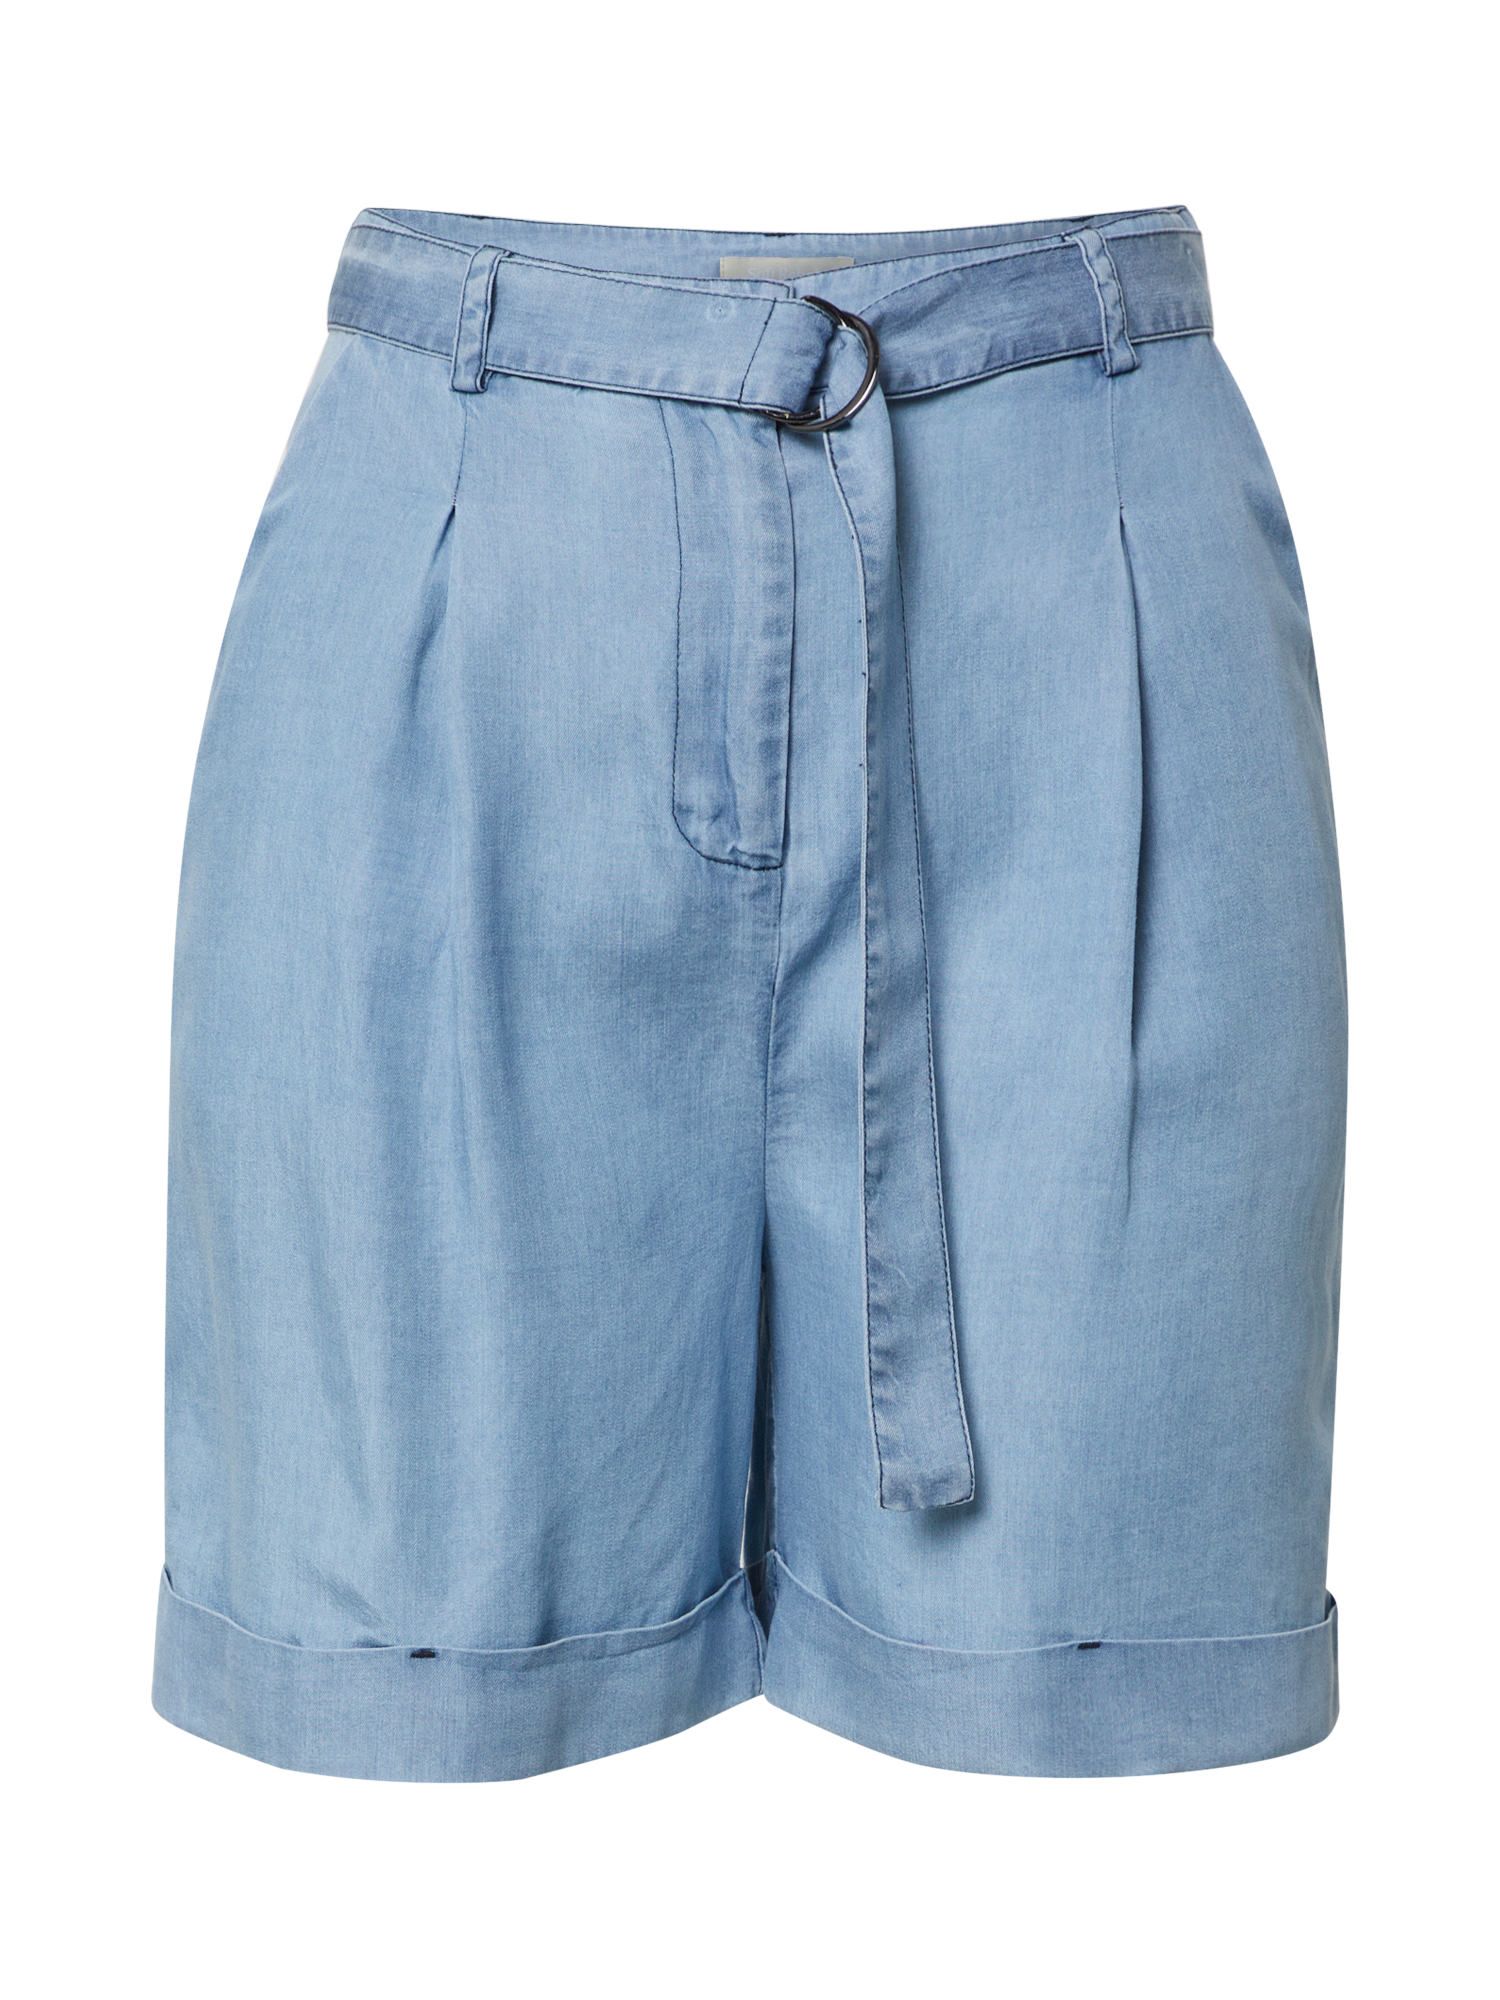 Taglie comode Donna Soft Rebels Shorts in Blu Chiaro 